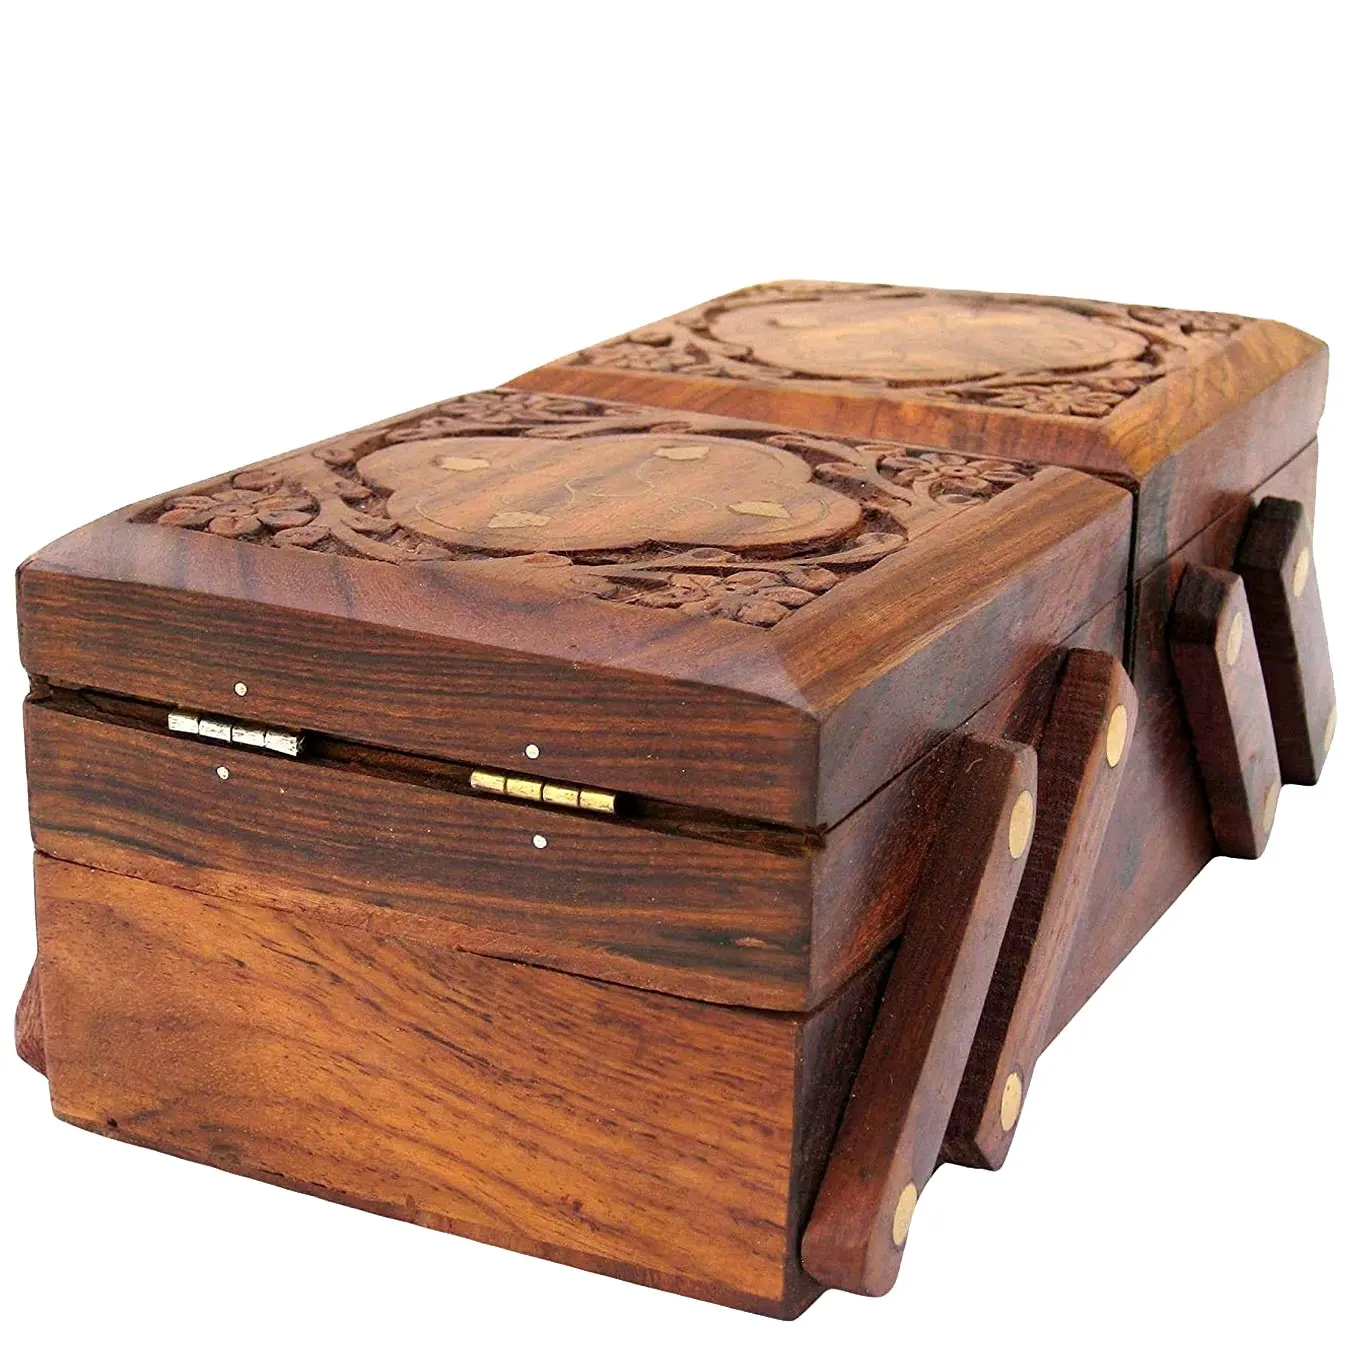 Caixa organizadora de madeira caixa de joias, caixa organizadora de malha de madeira itens de presente